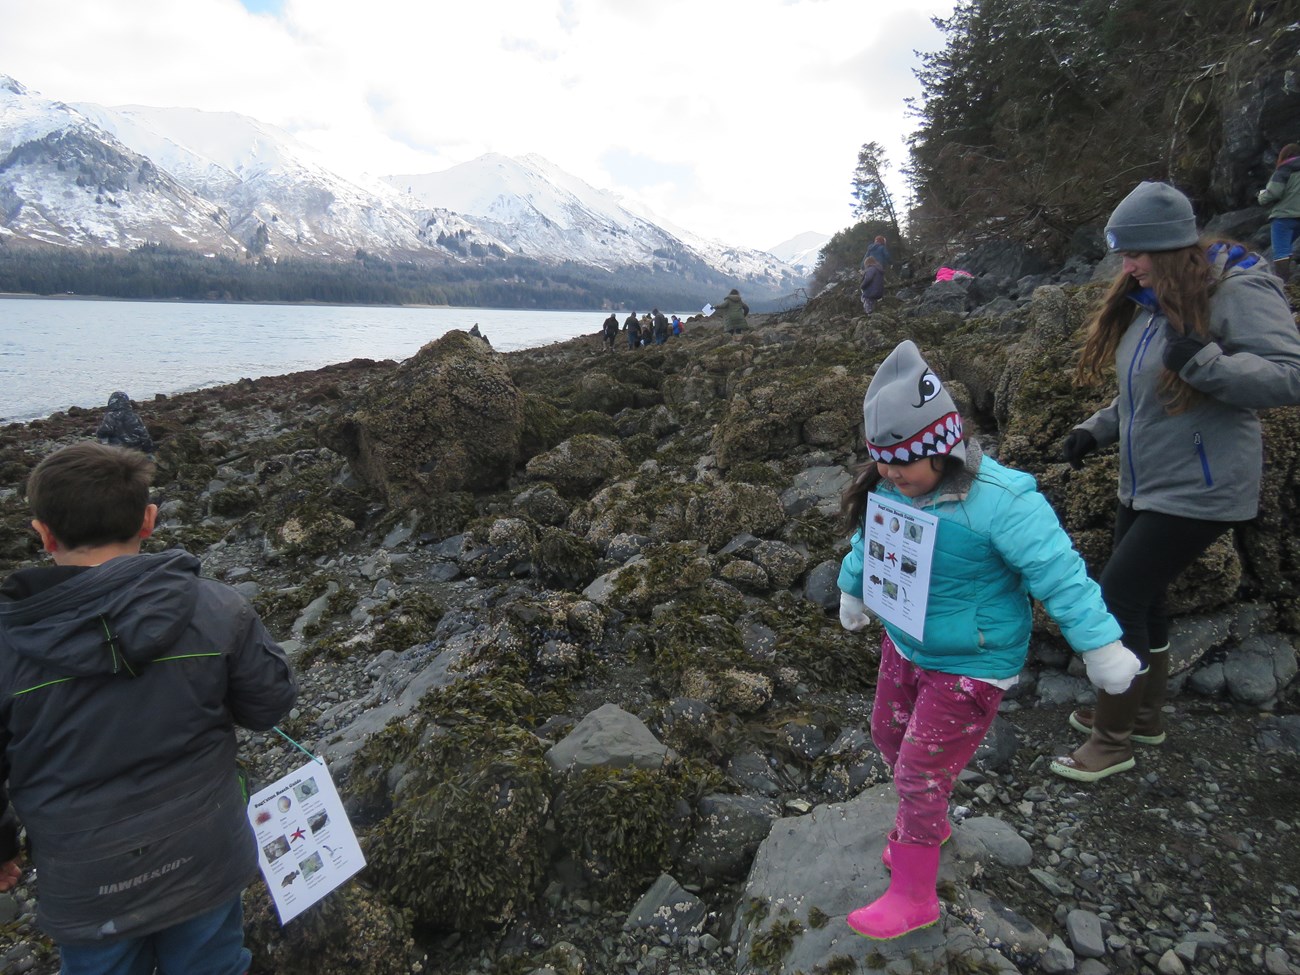 Students walk on a rocky coastline in Alaska.